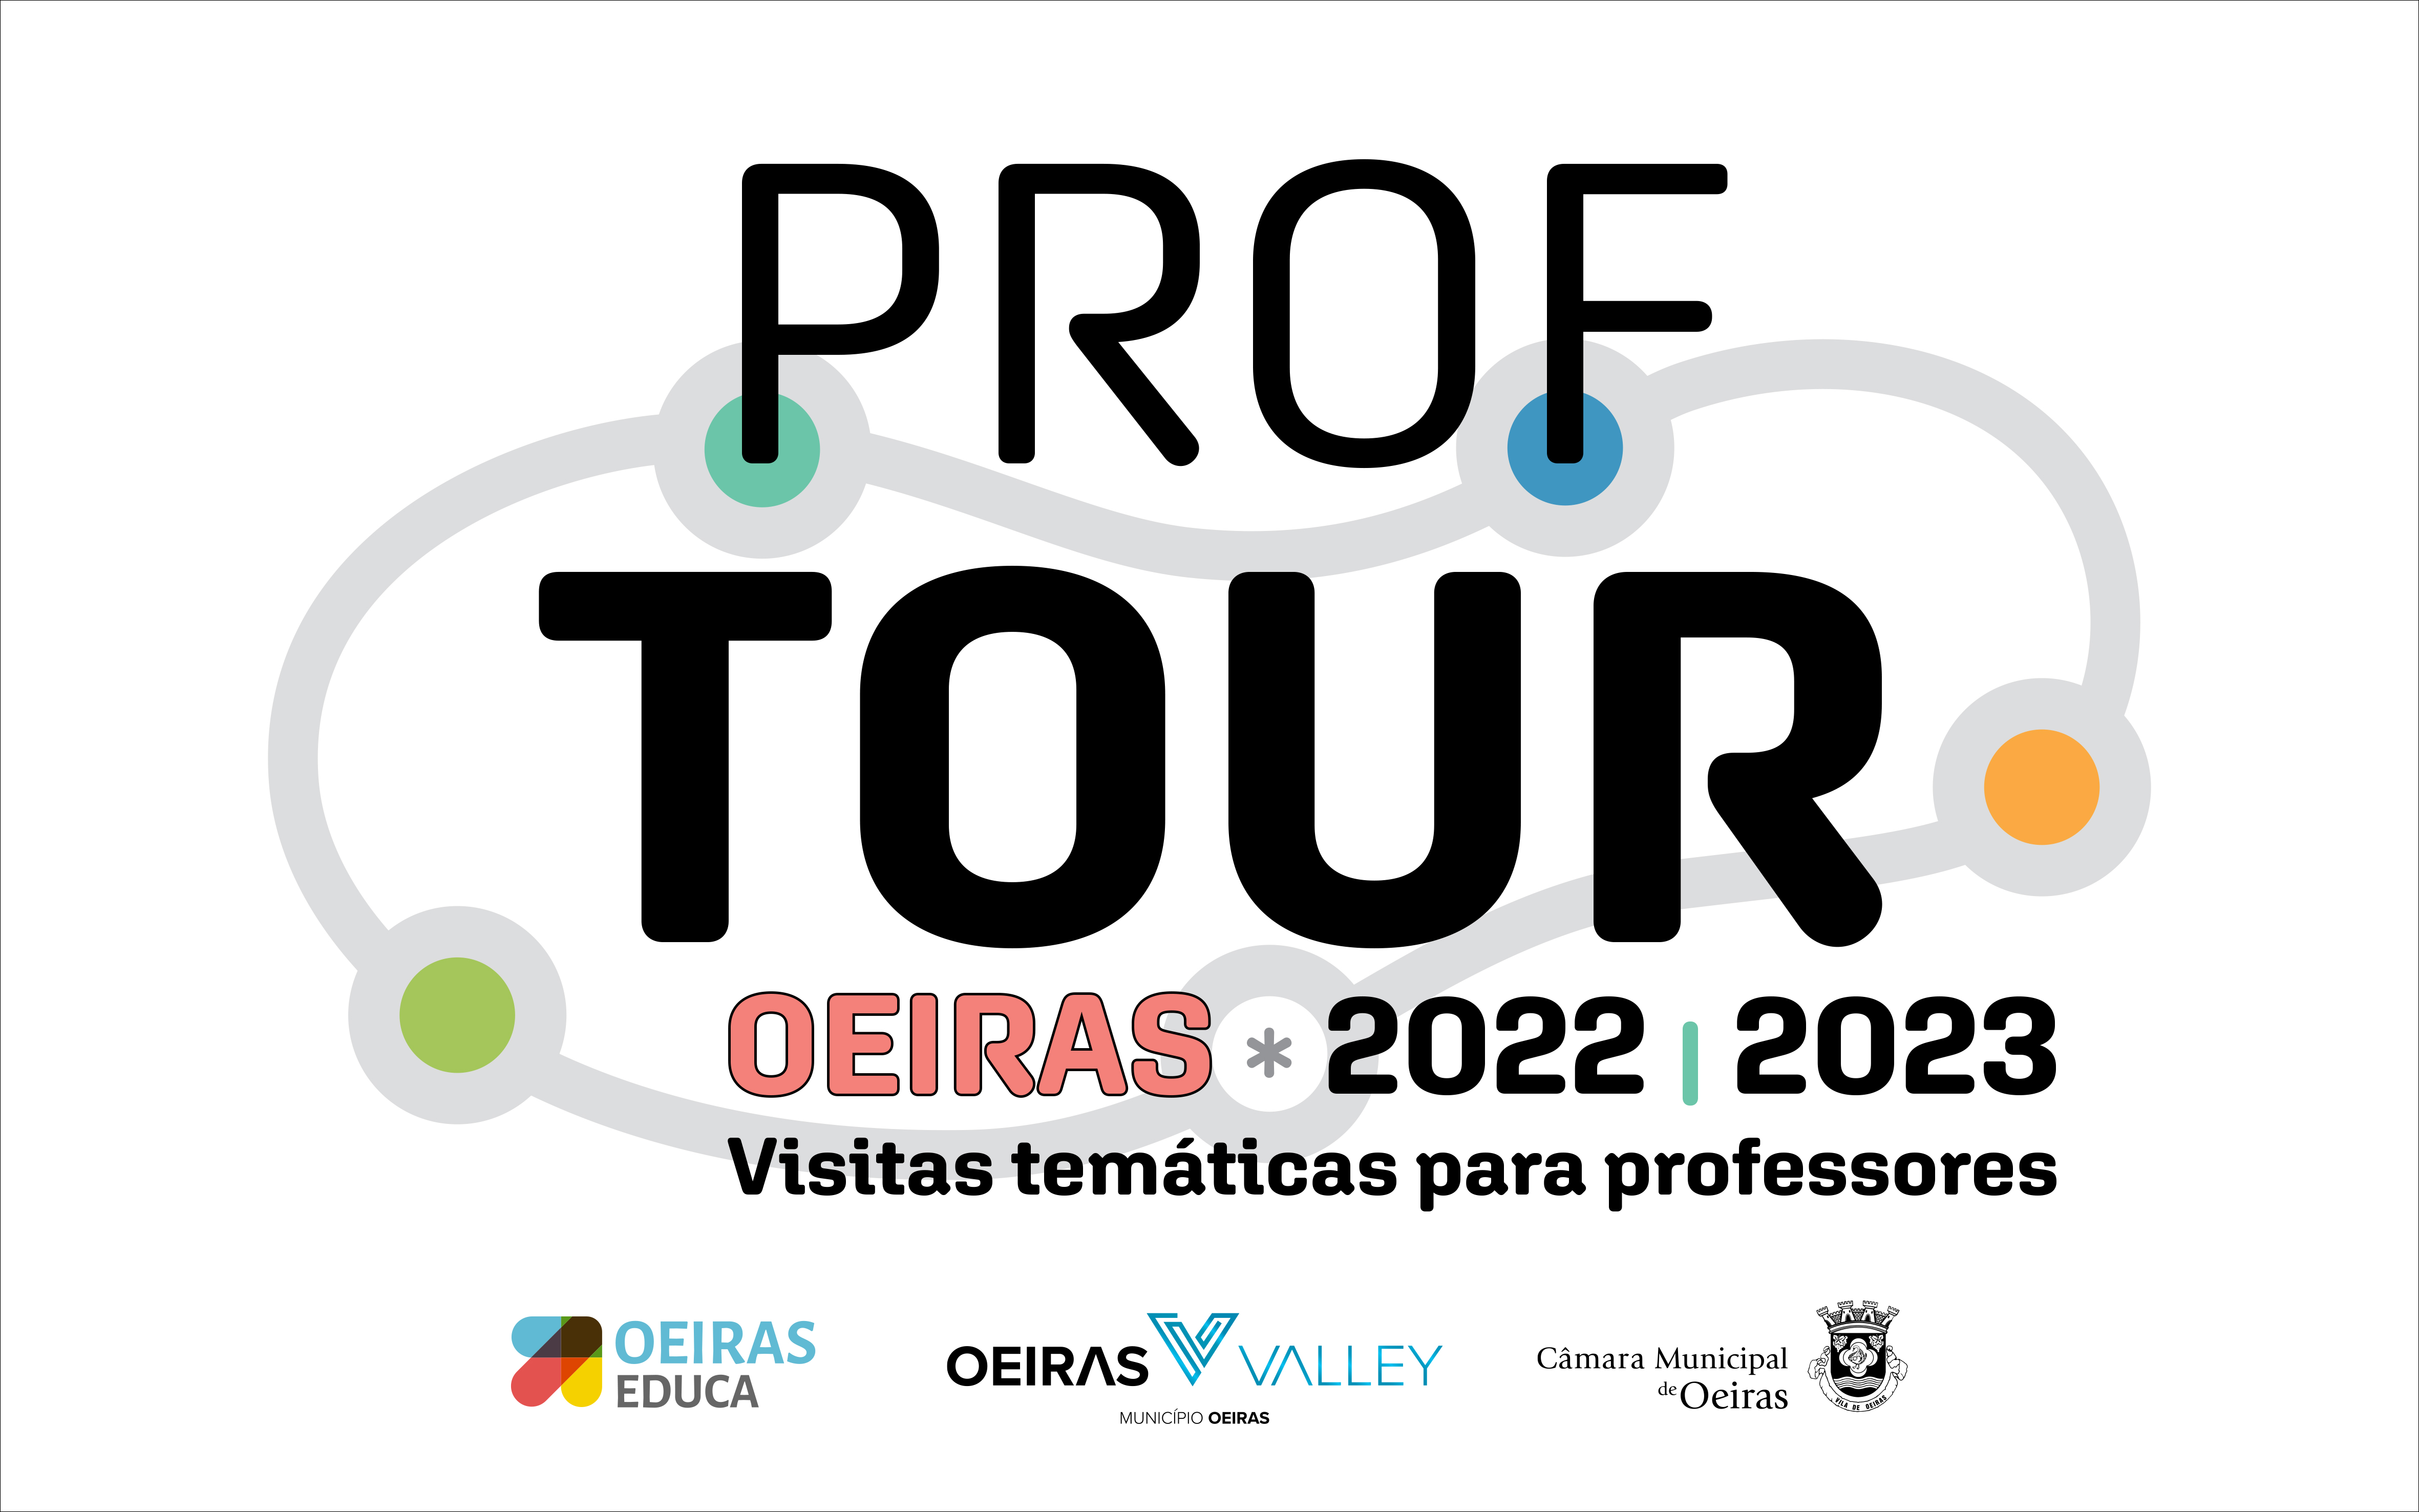 Prof TOUR Oeiras | Visitas temáticas para professores